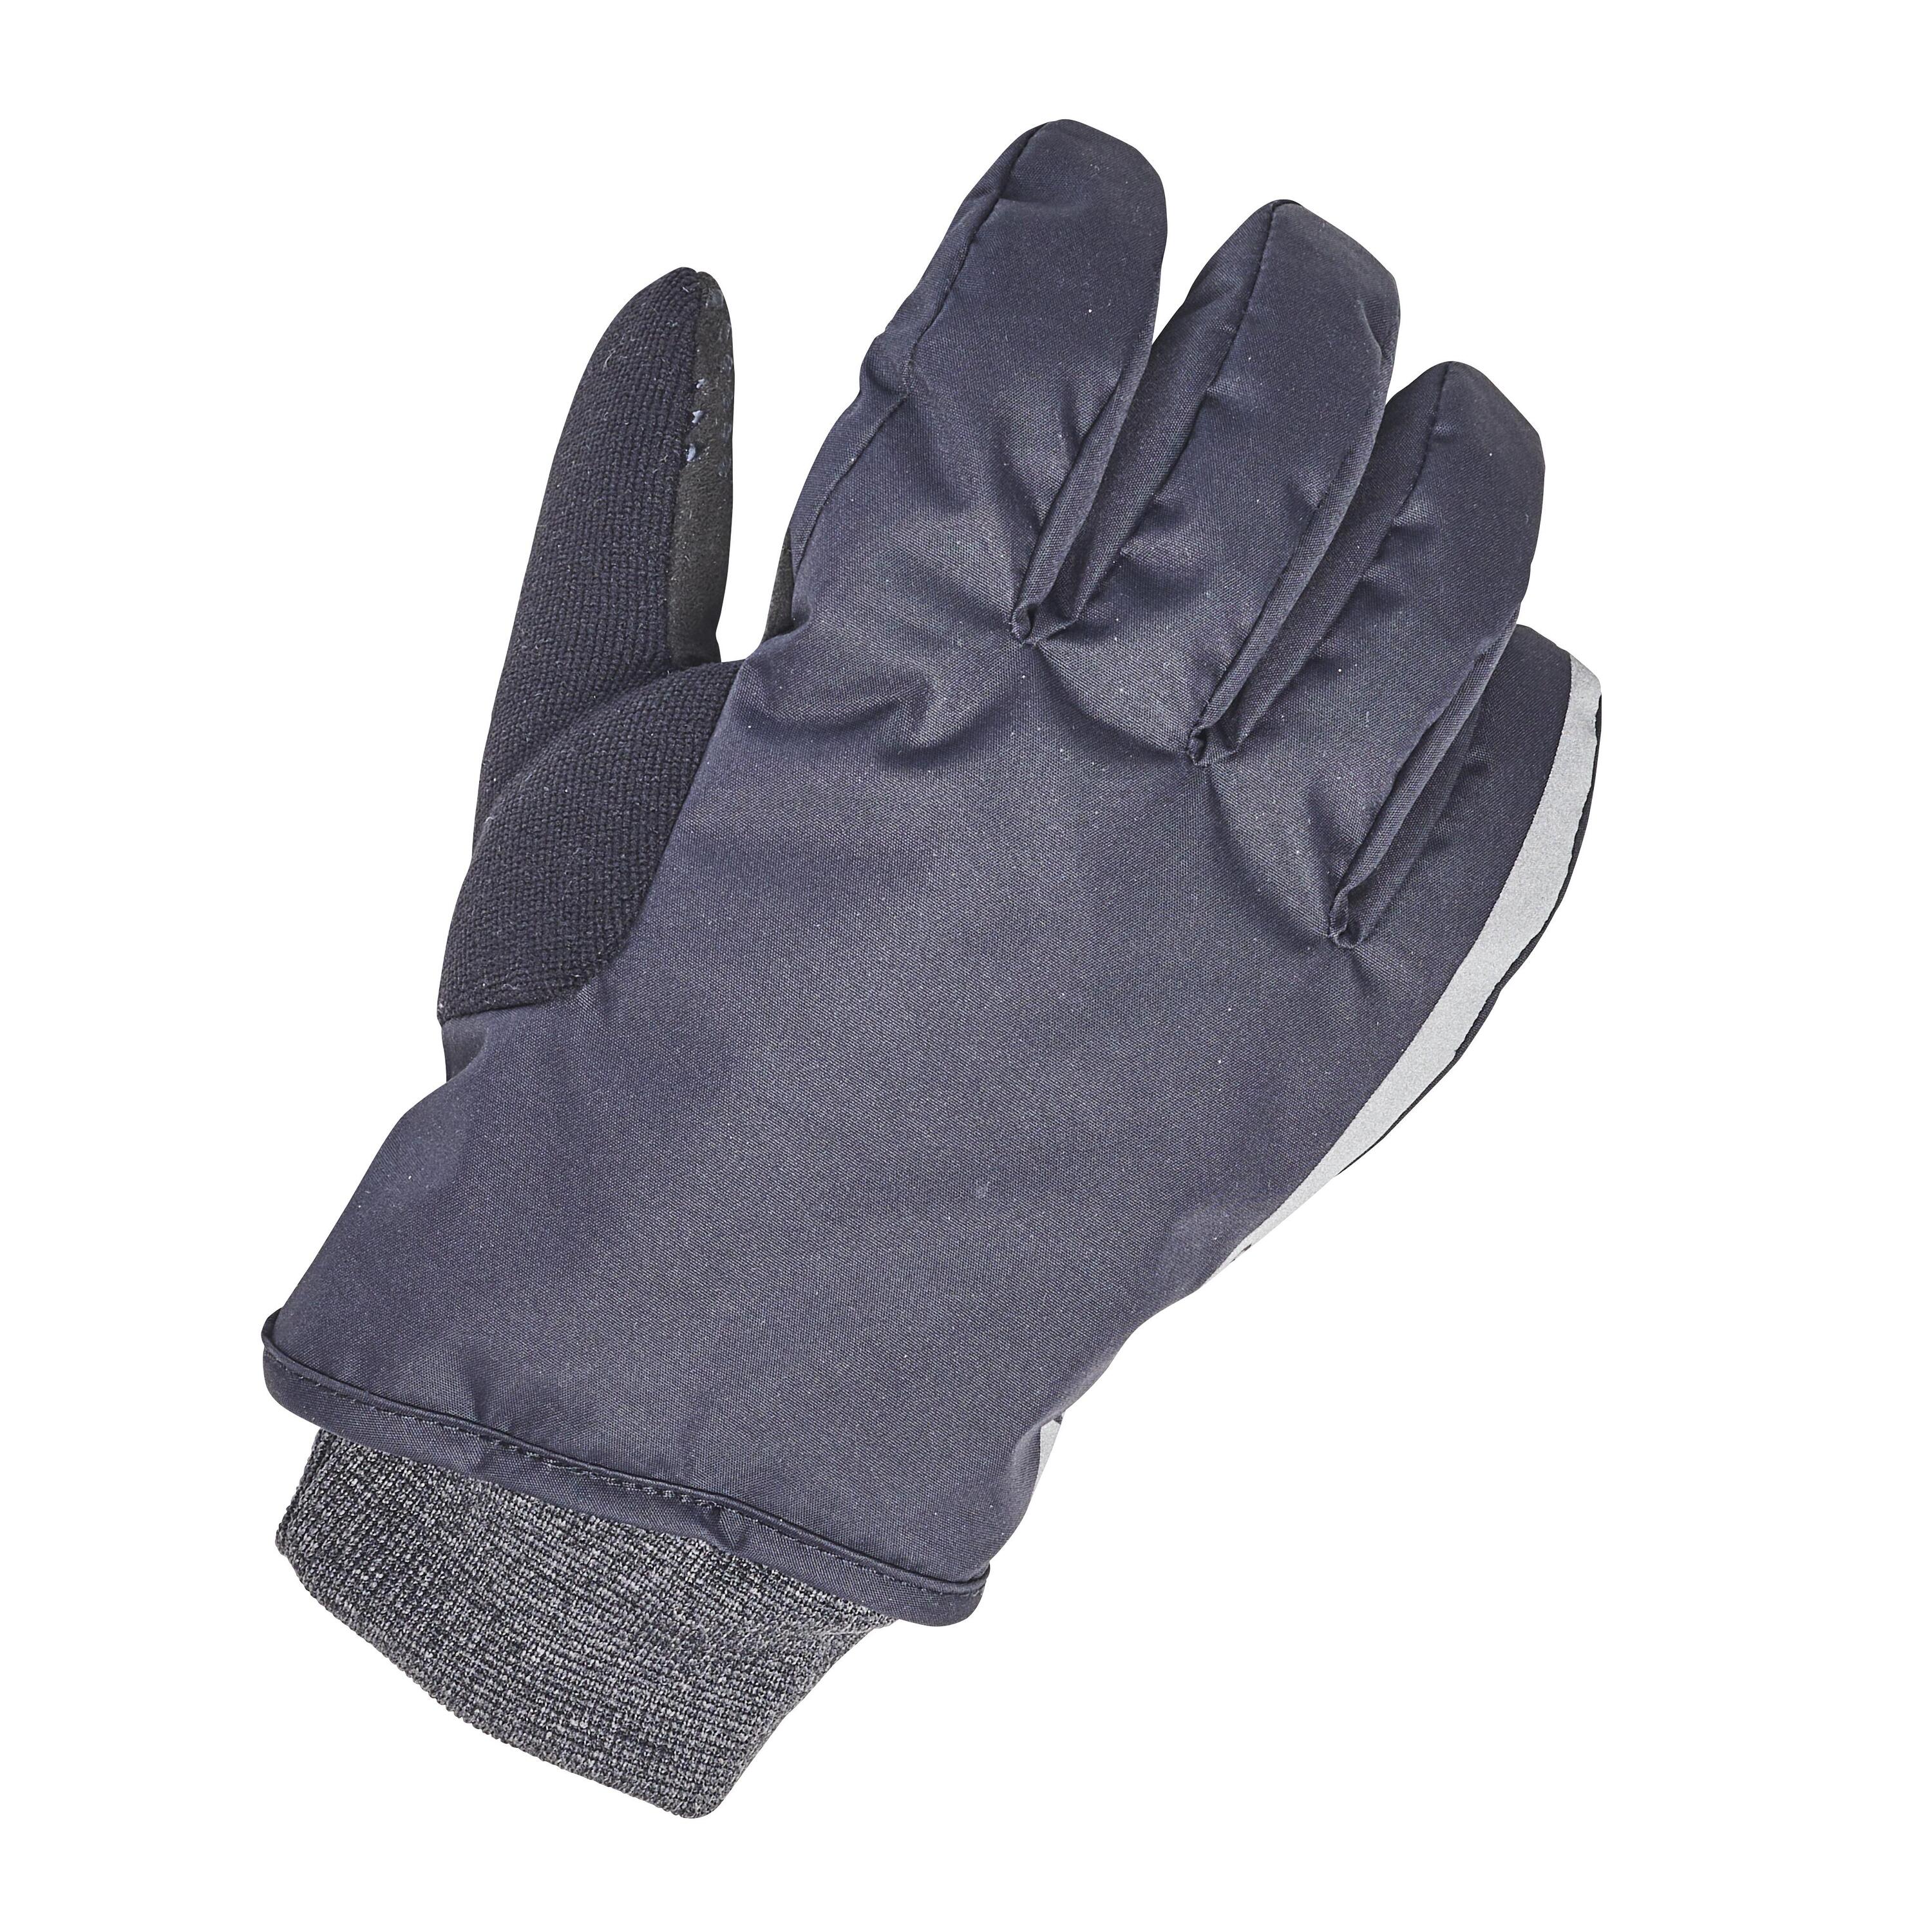 Kids' Winter Cycling Gloves 500 - Black 2/3